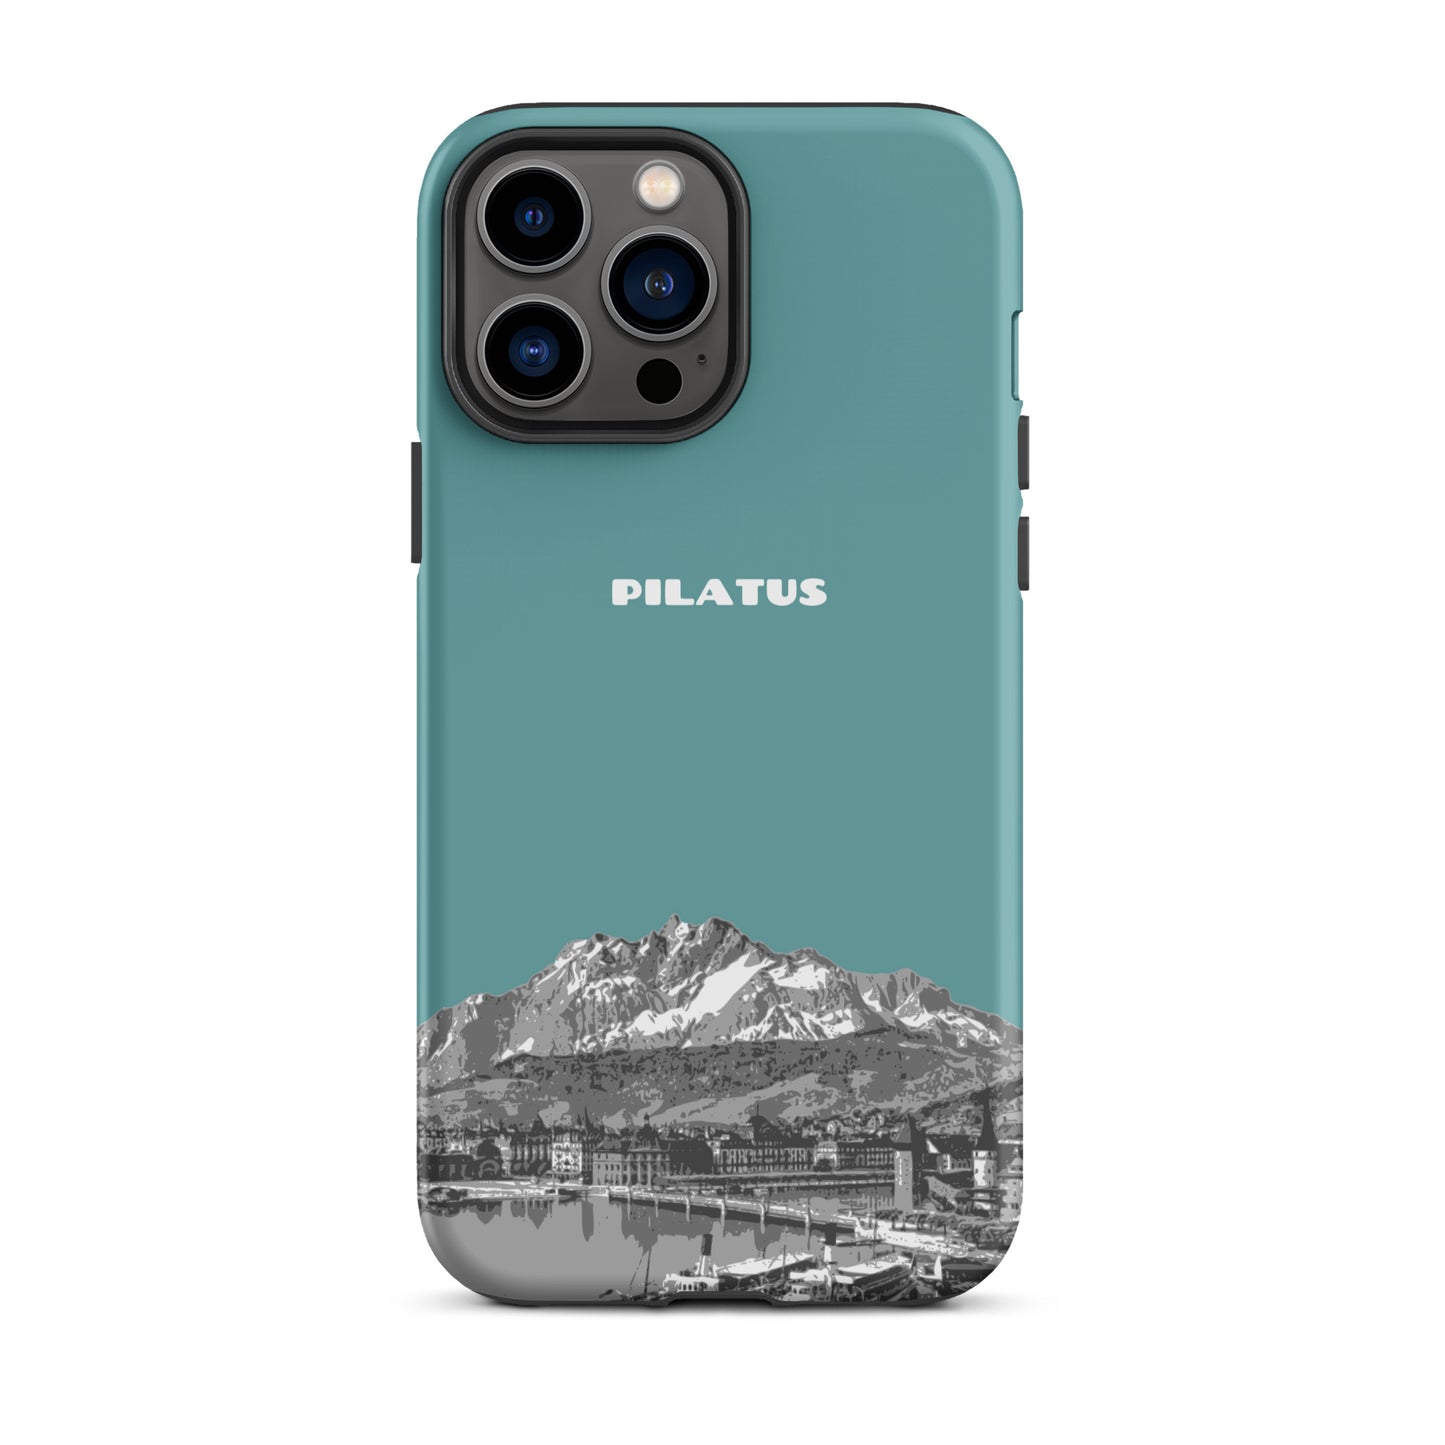 iPhone Case - Pilatus - Kadettenblau